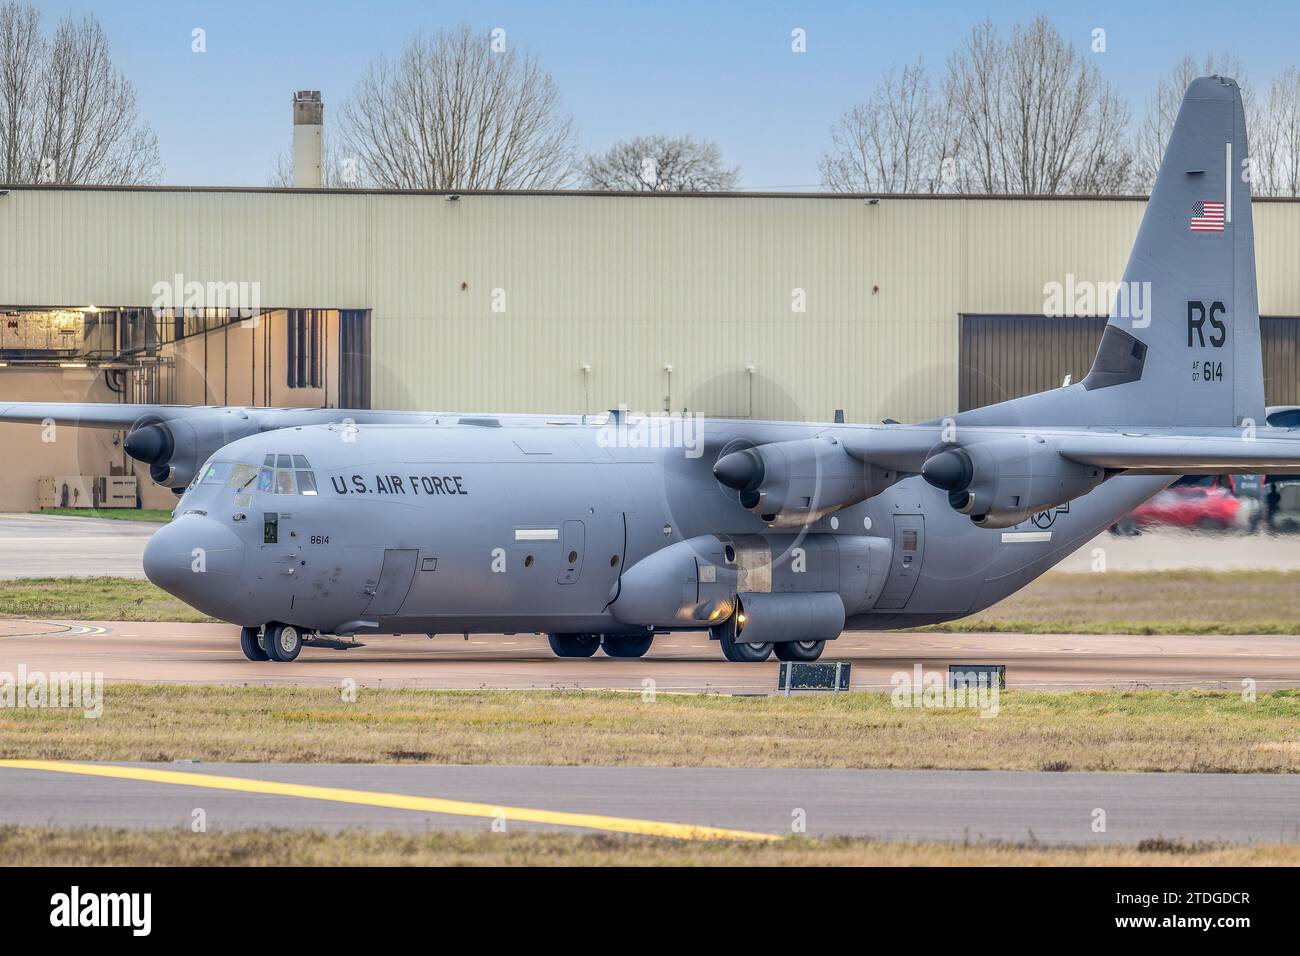 USAF C-130 RAF FAIRFORD Stockfoto